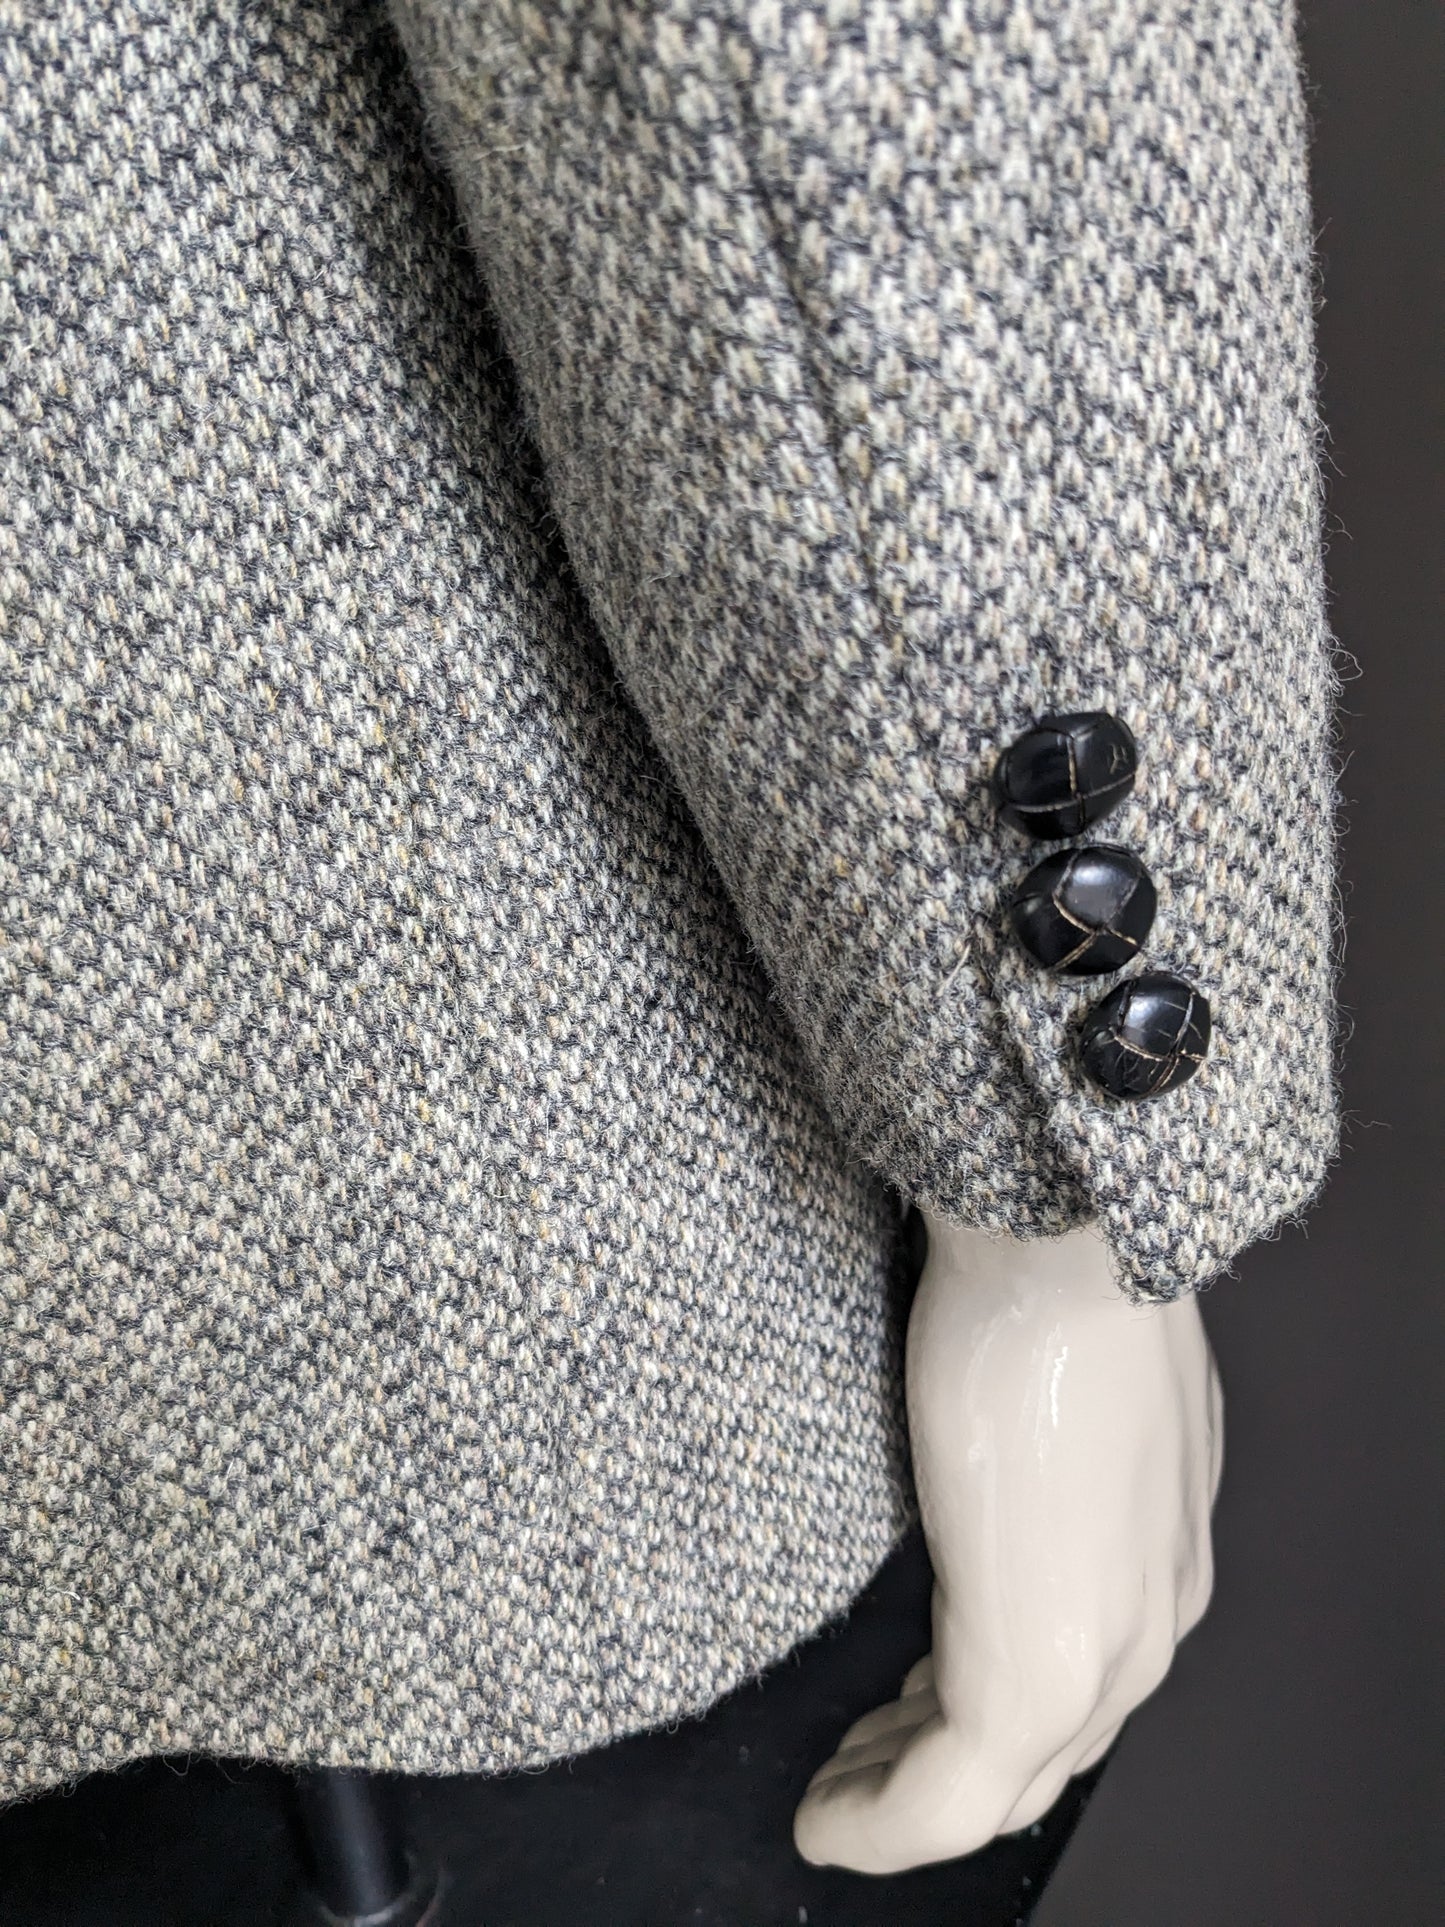 Vintage abrigo colas Harris Tweed traje chaqueta. Motivo gris beige. Talla 25 (50/M).